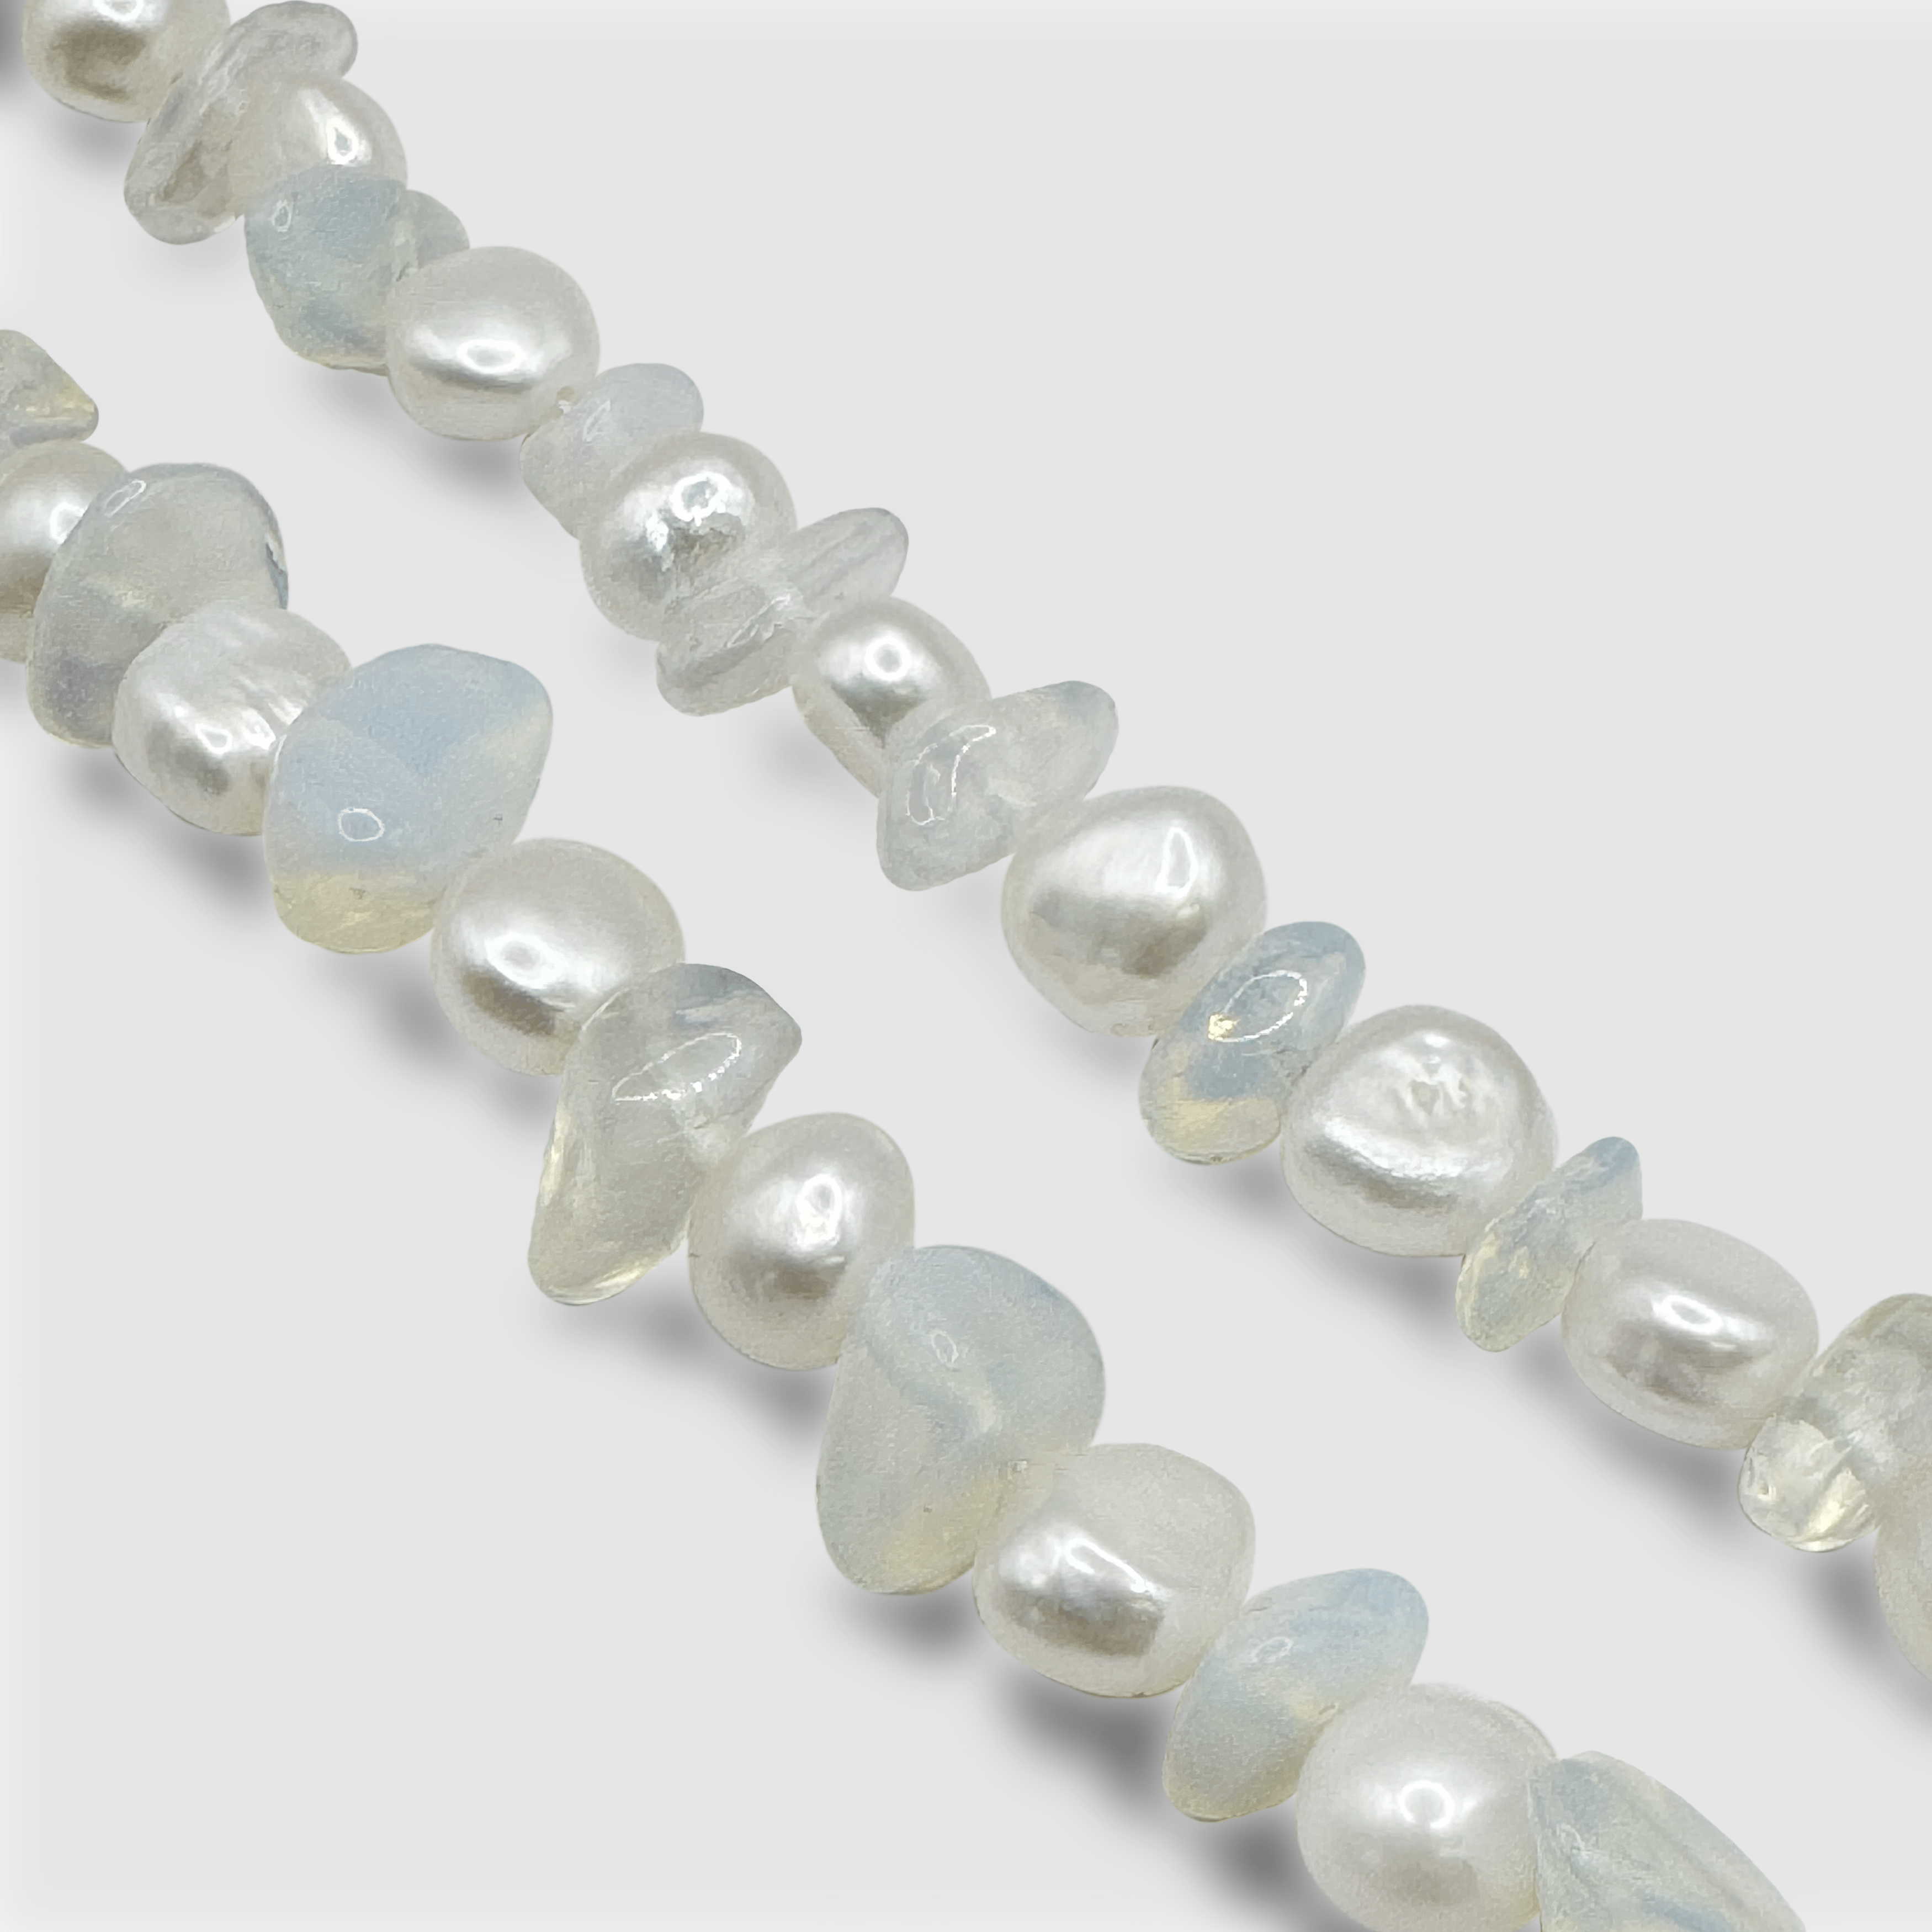 Collier de vraies perles de quartz bleu (argent)